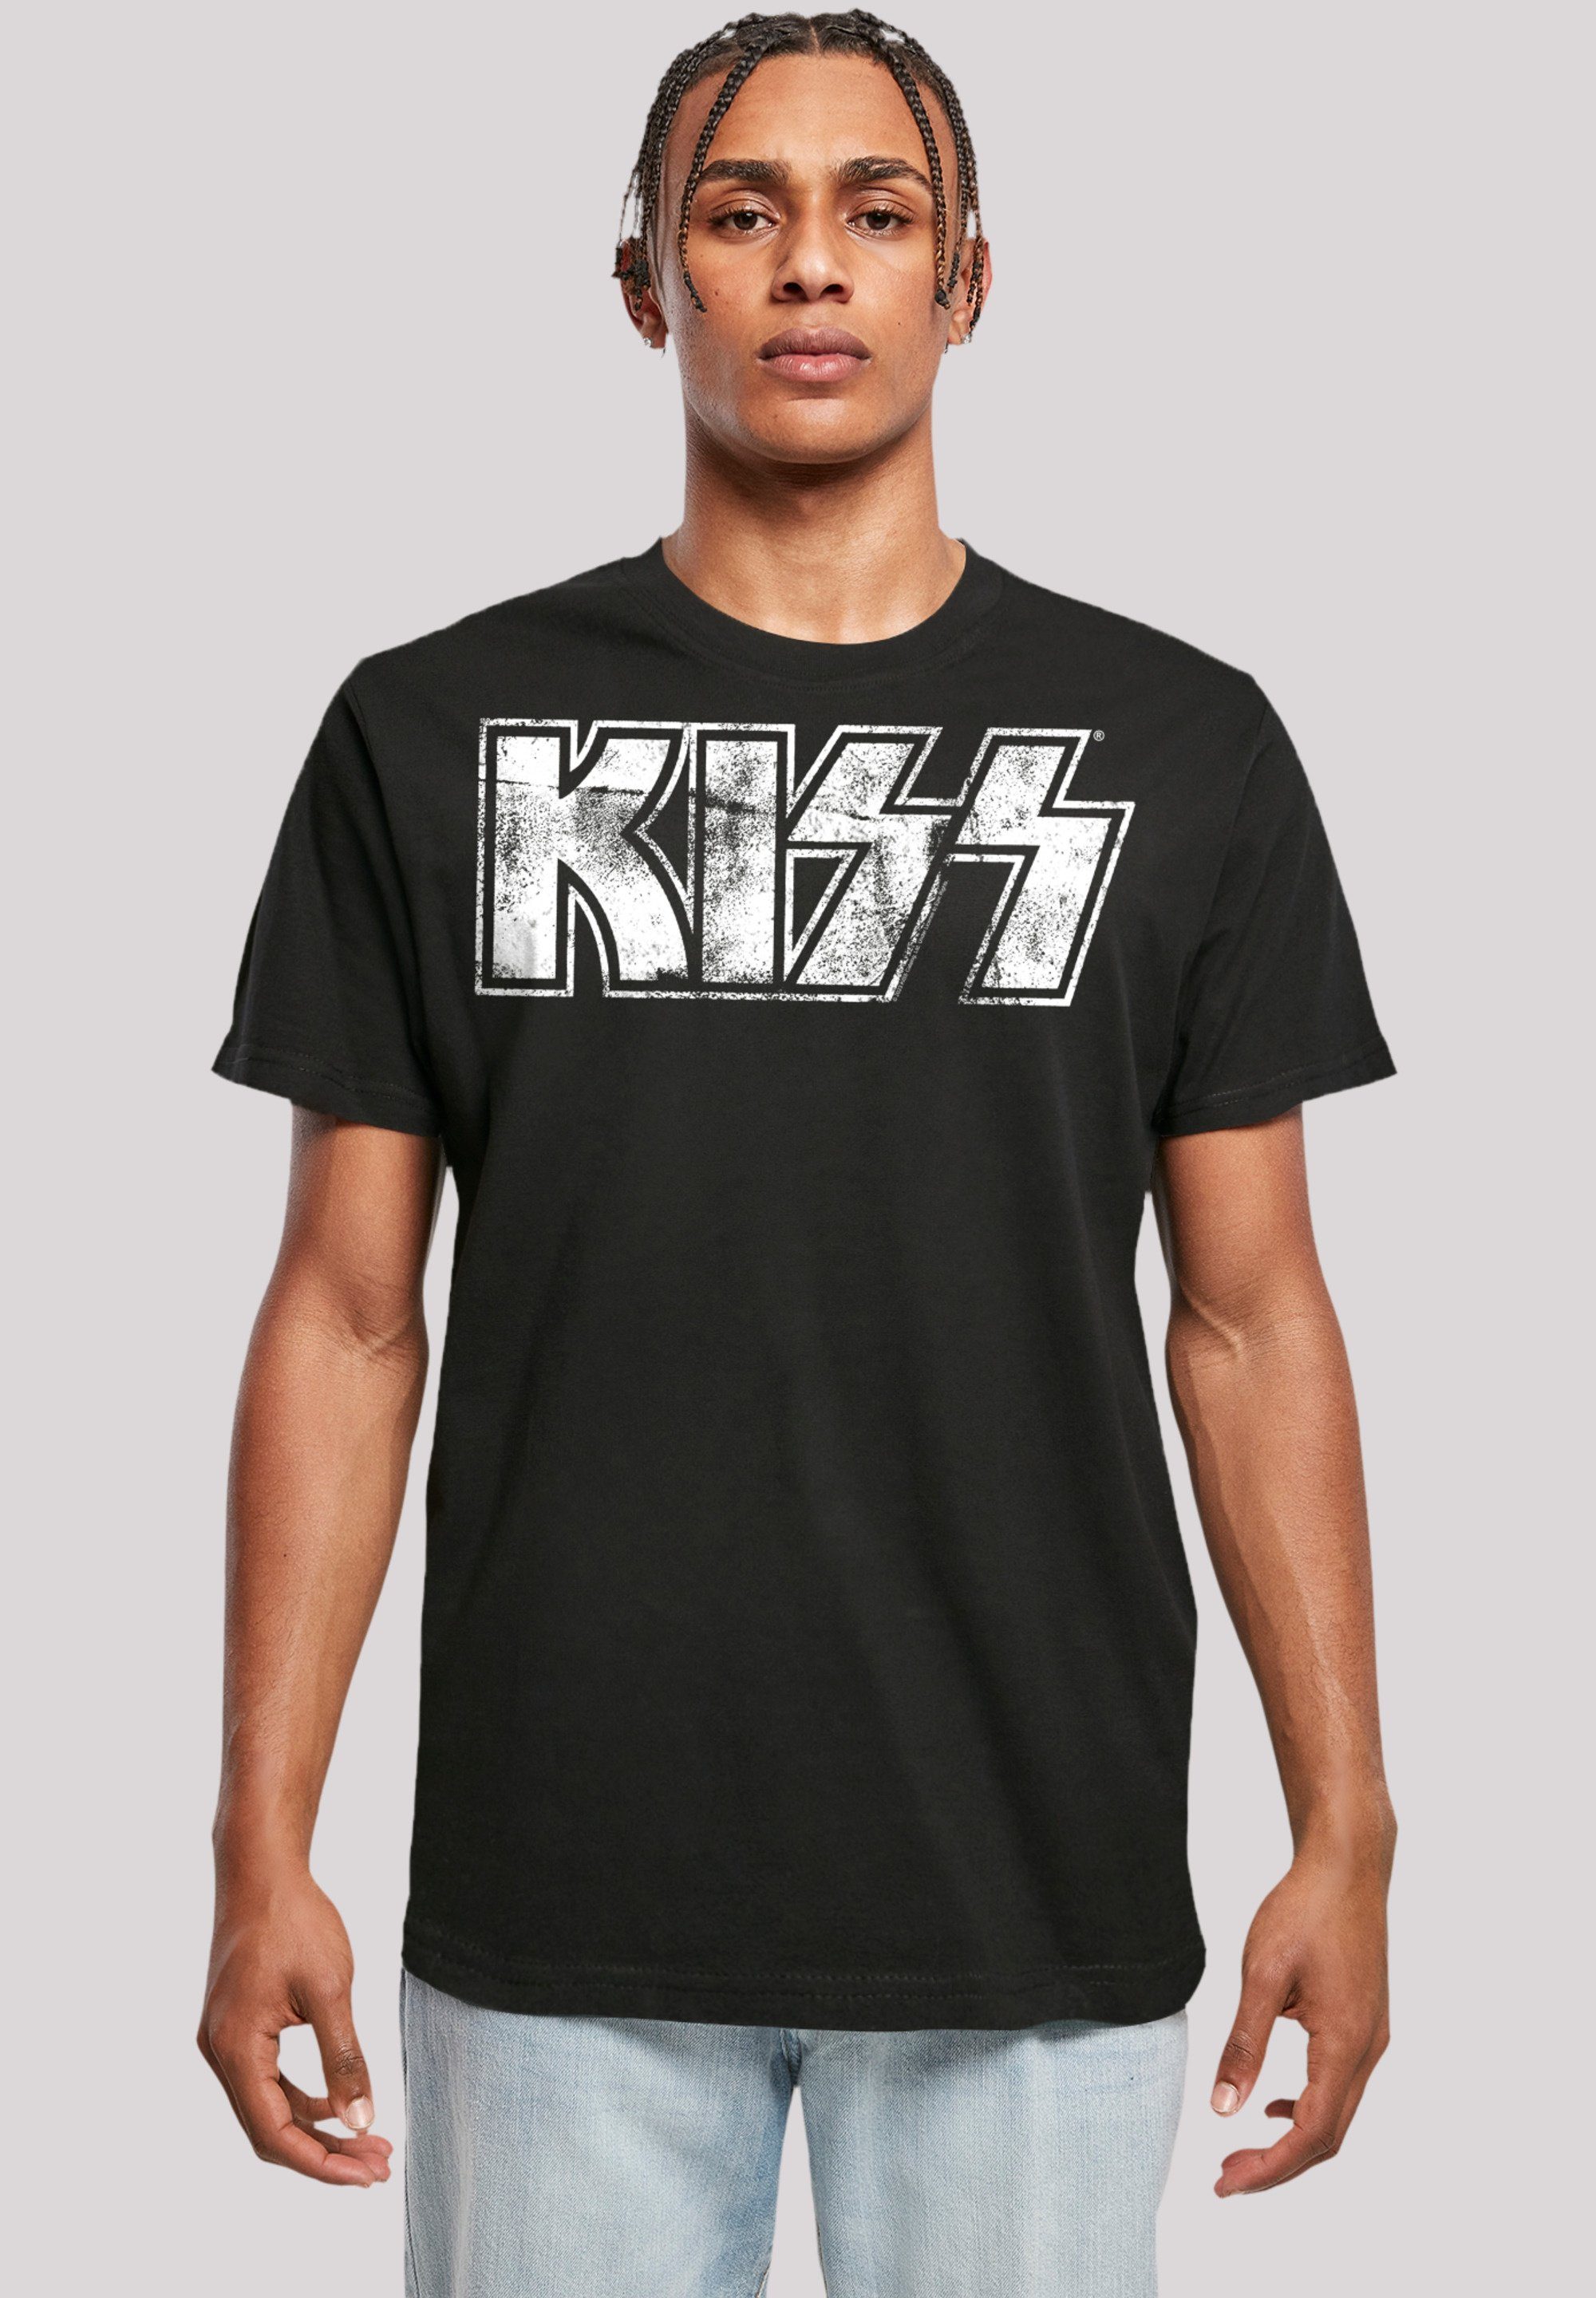 F4NT4STIC T-Shirt Kiss Rock Band Vintage Logo Premium Qualität, Musik, By Rock Off